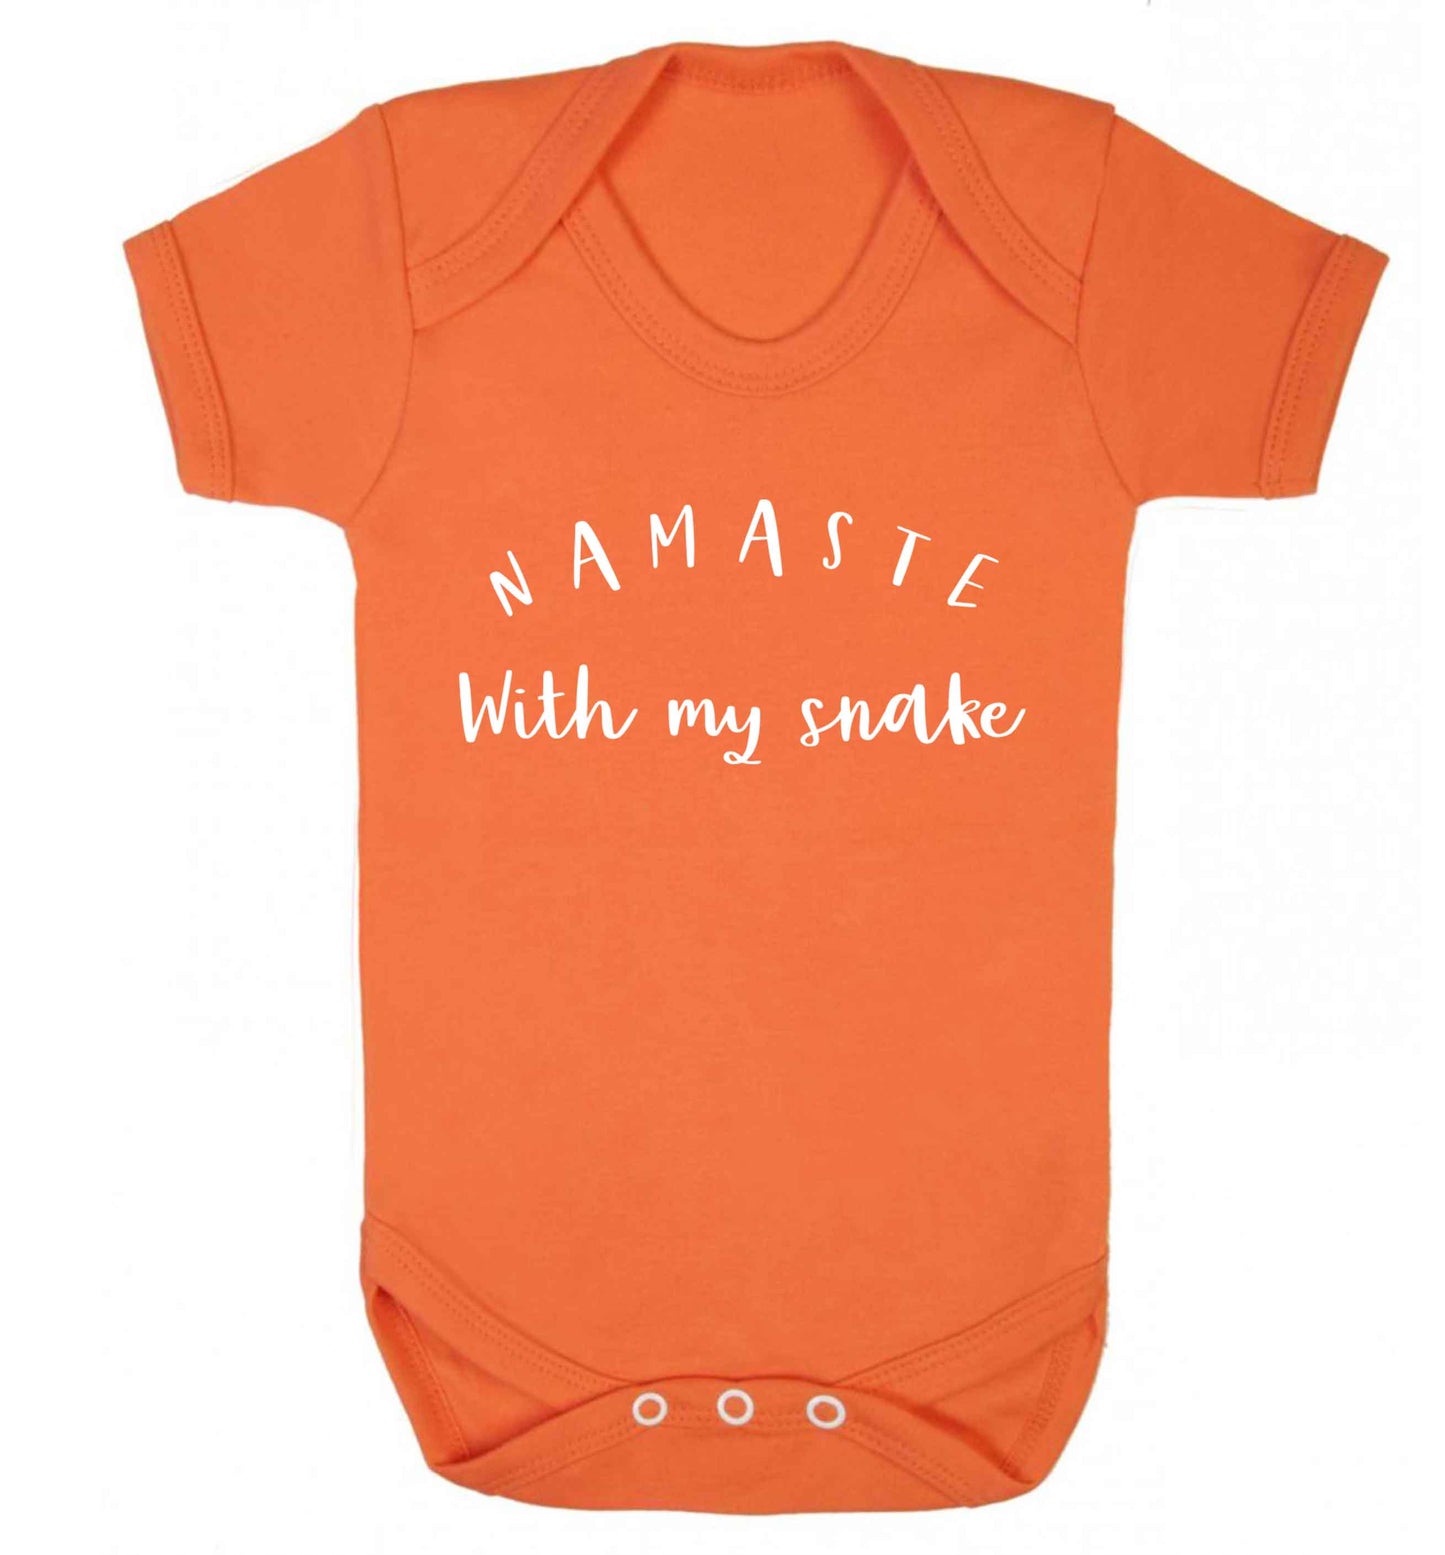 Namaste with my snake Baby Vest orange 18-24 months